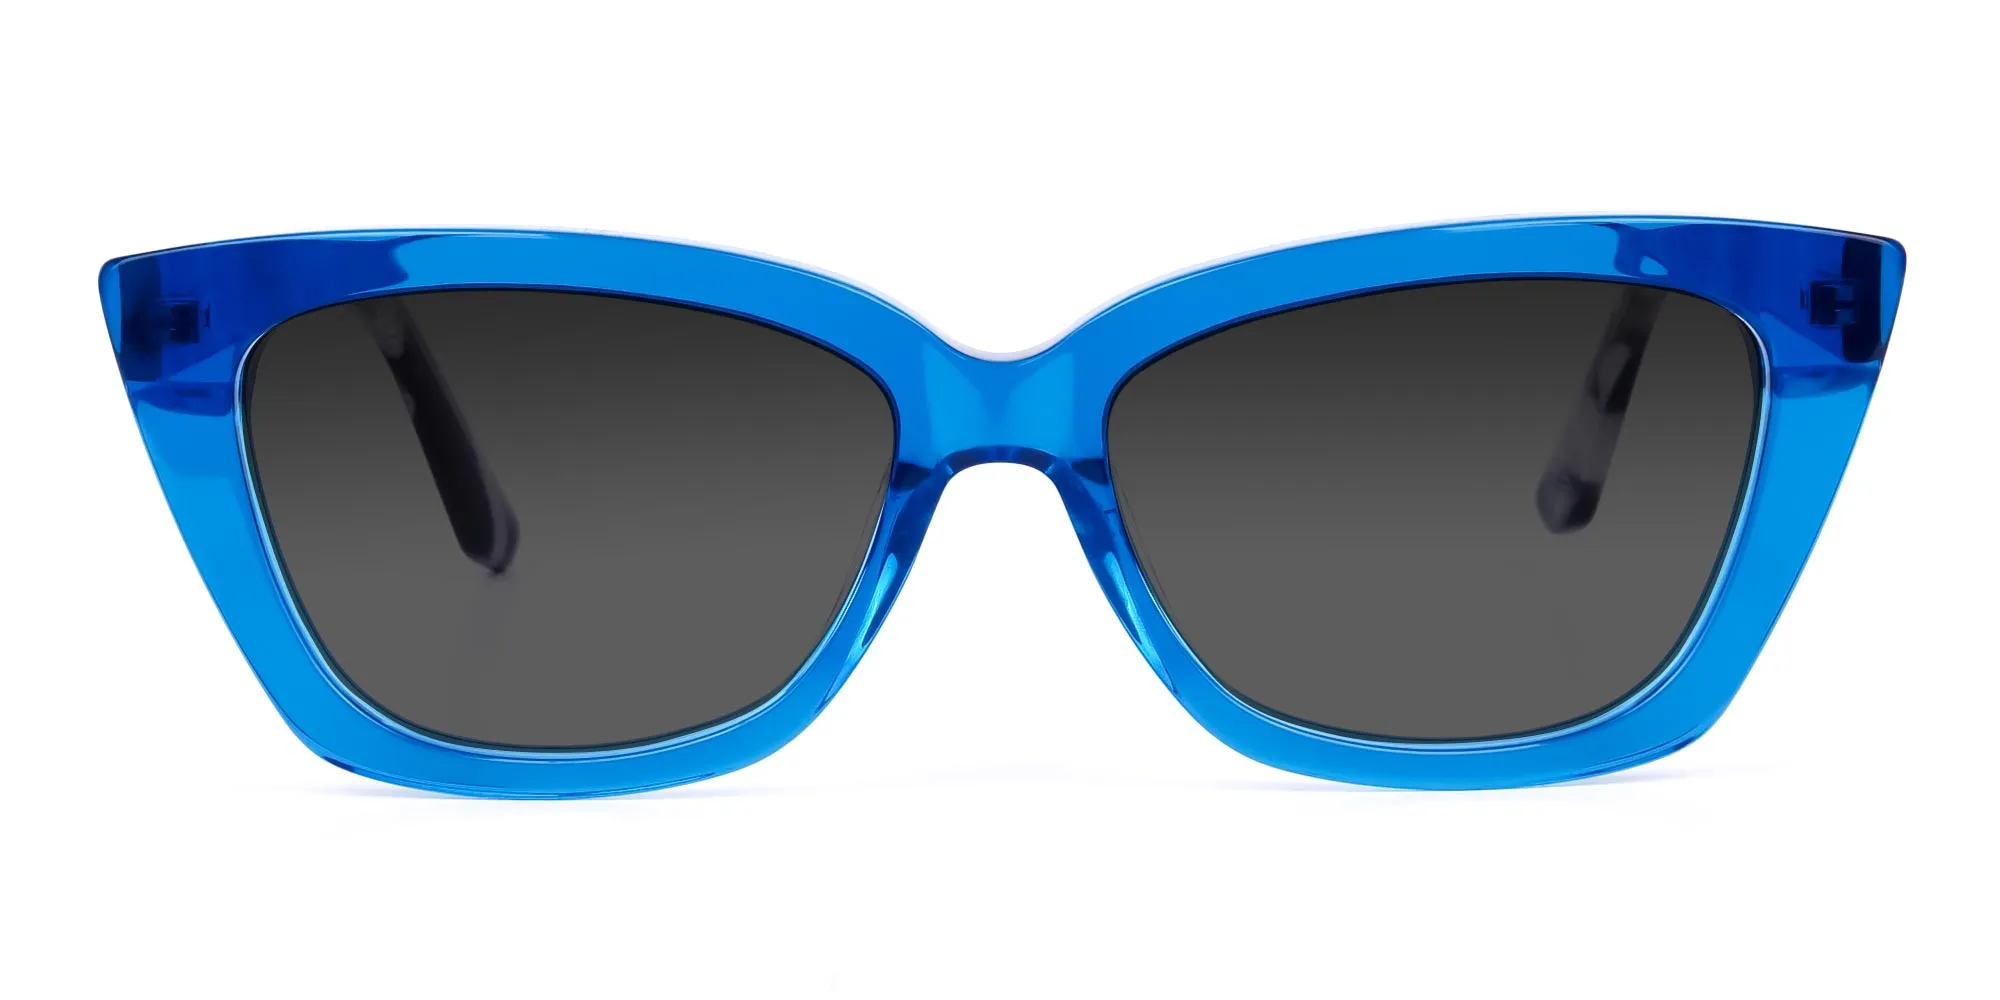 Blue-Cat-Eye-Sunglasses-with-Grey-Tint-2